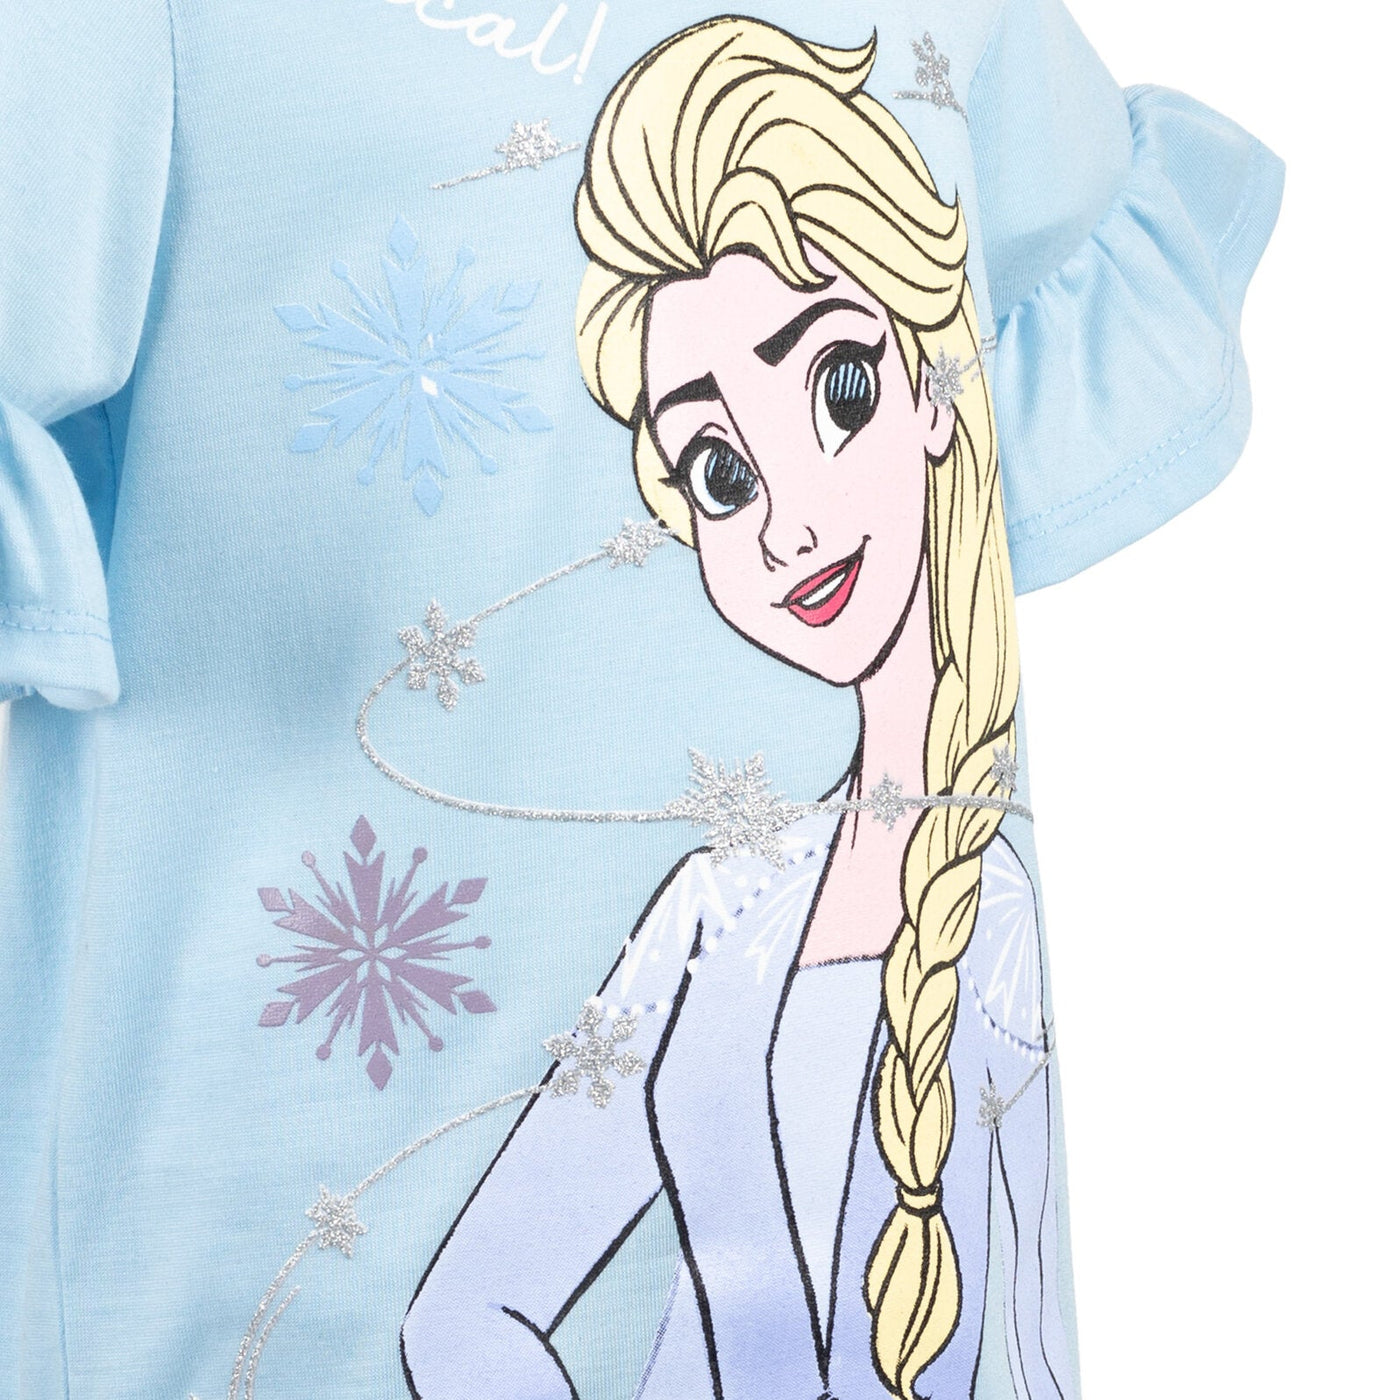 Frozen Queen Elsa Graphic T-Shirt & Leggings - imagikids